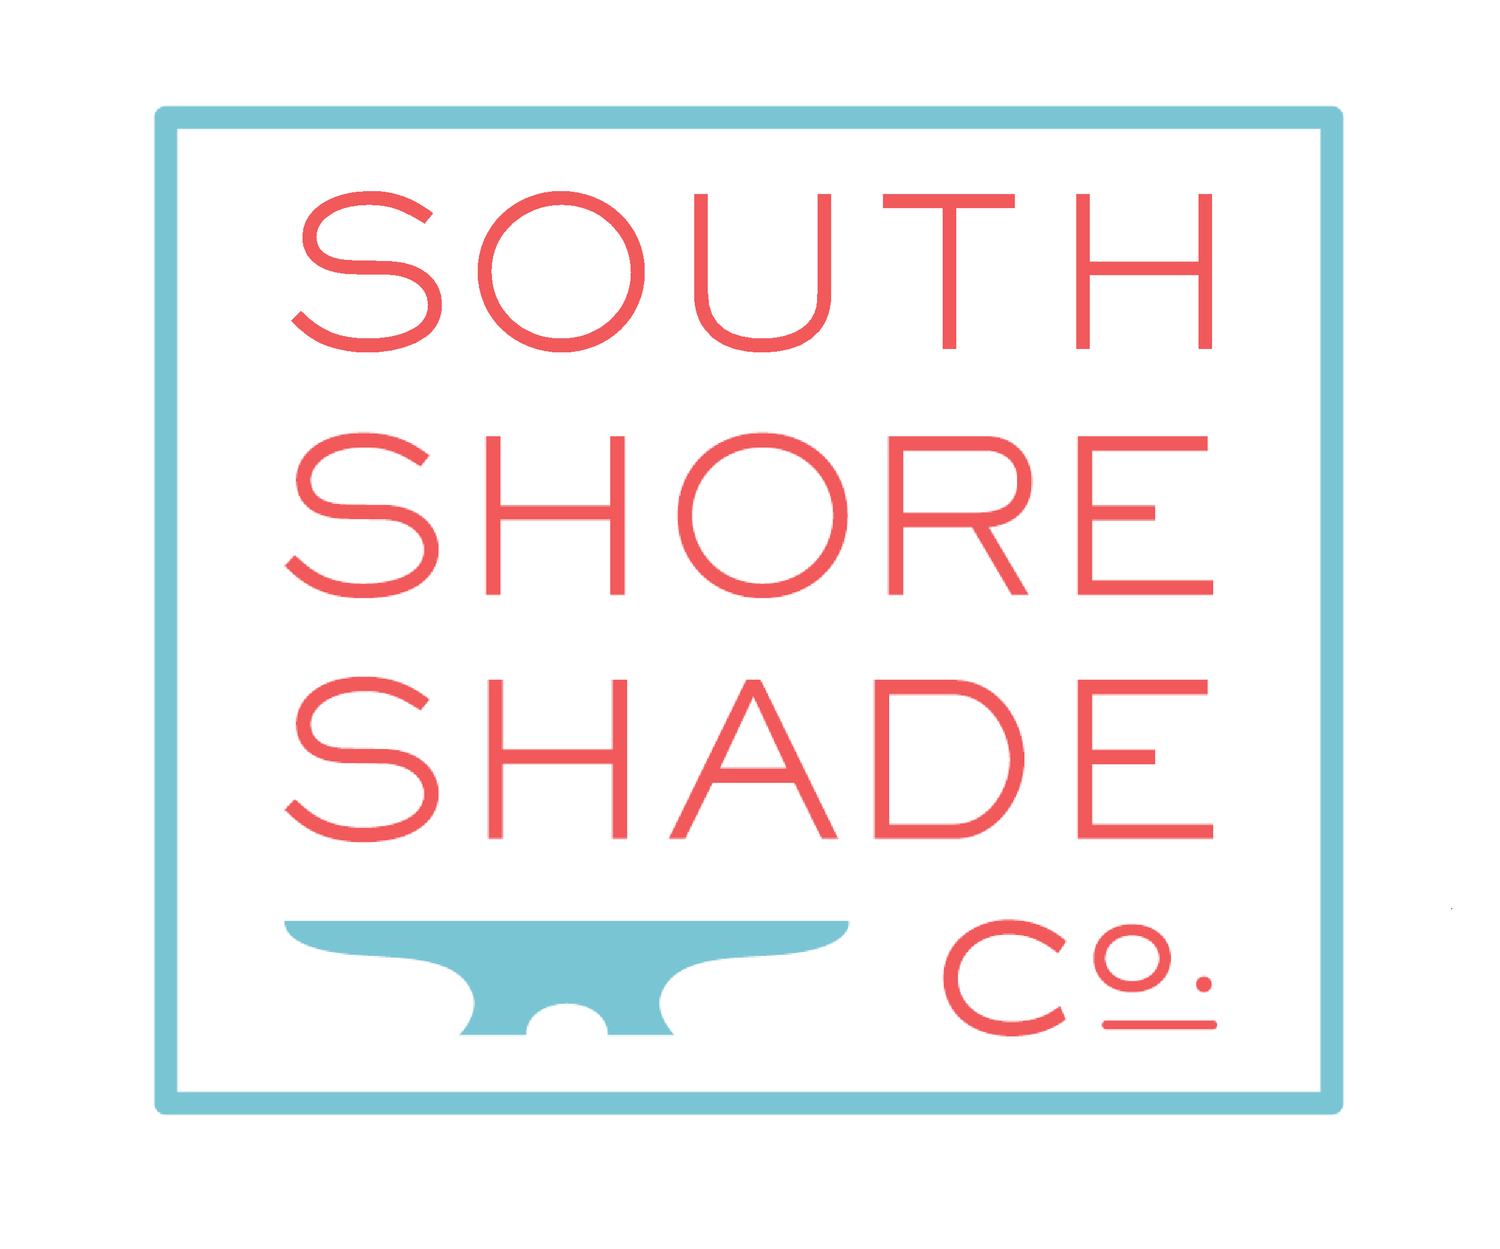 South Shore Shade Co.